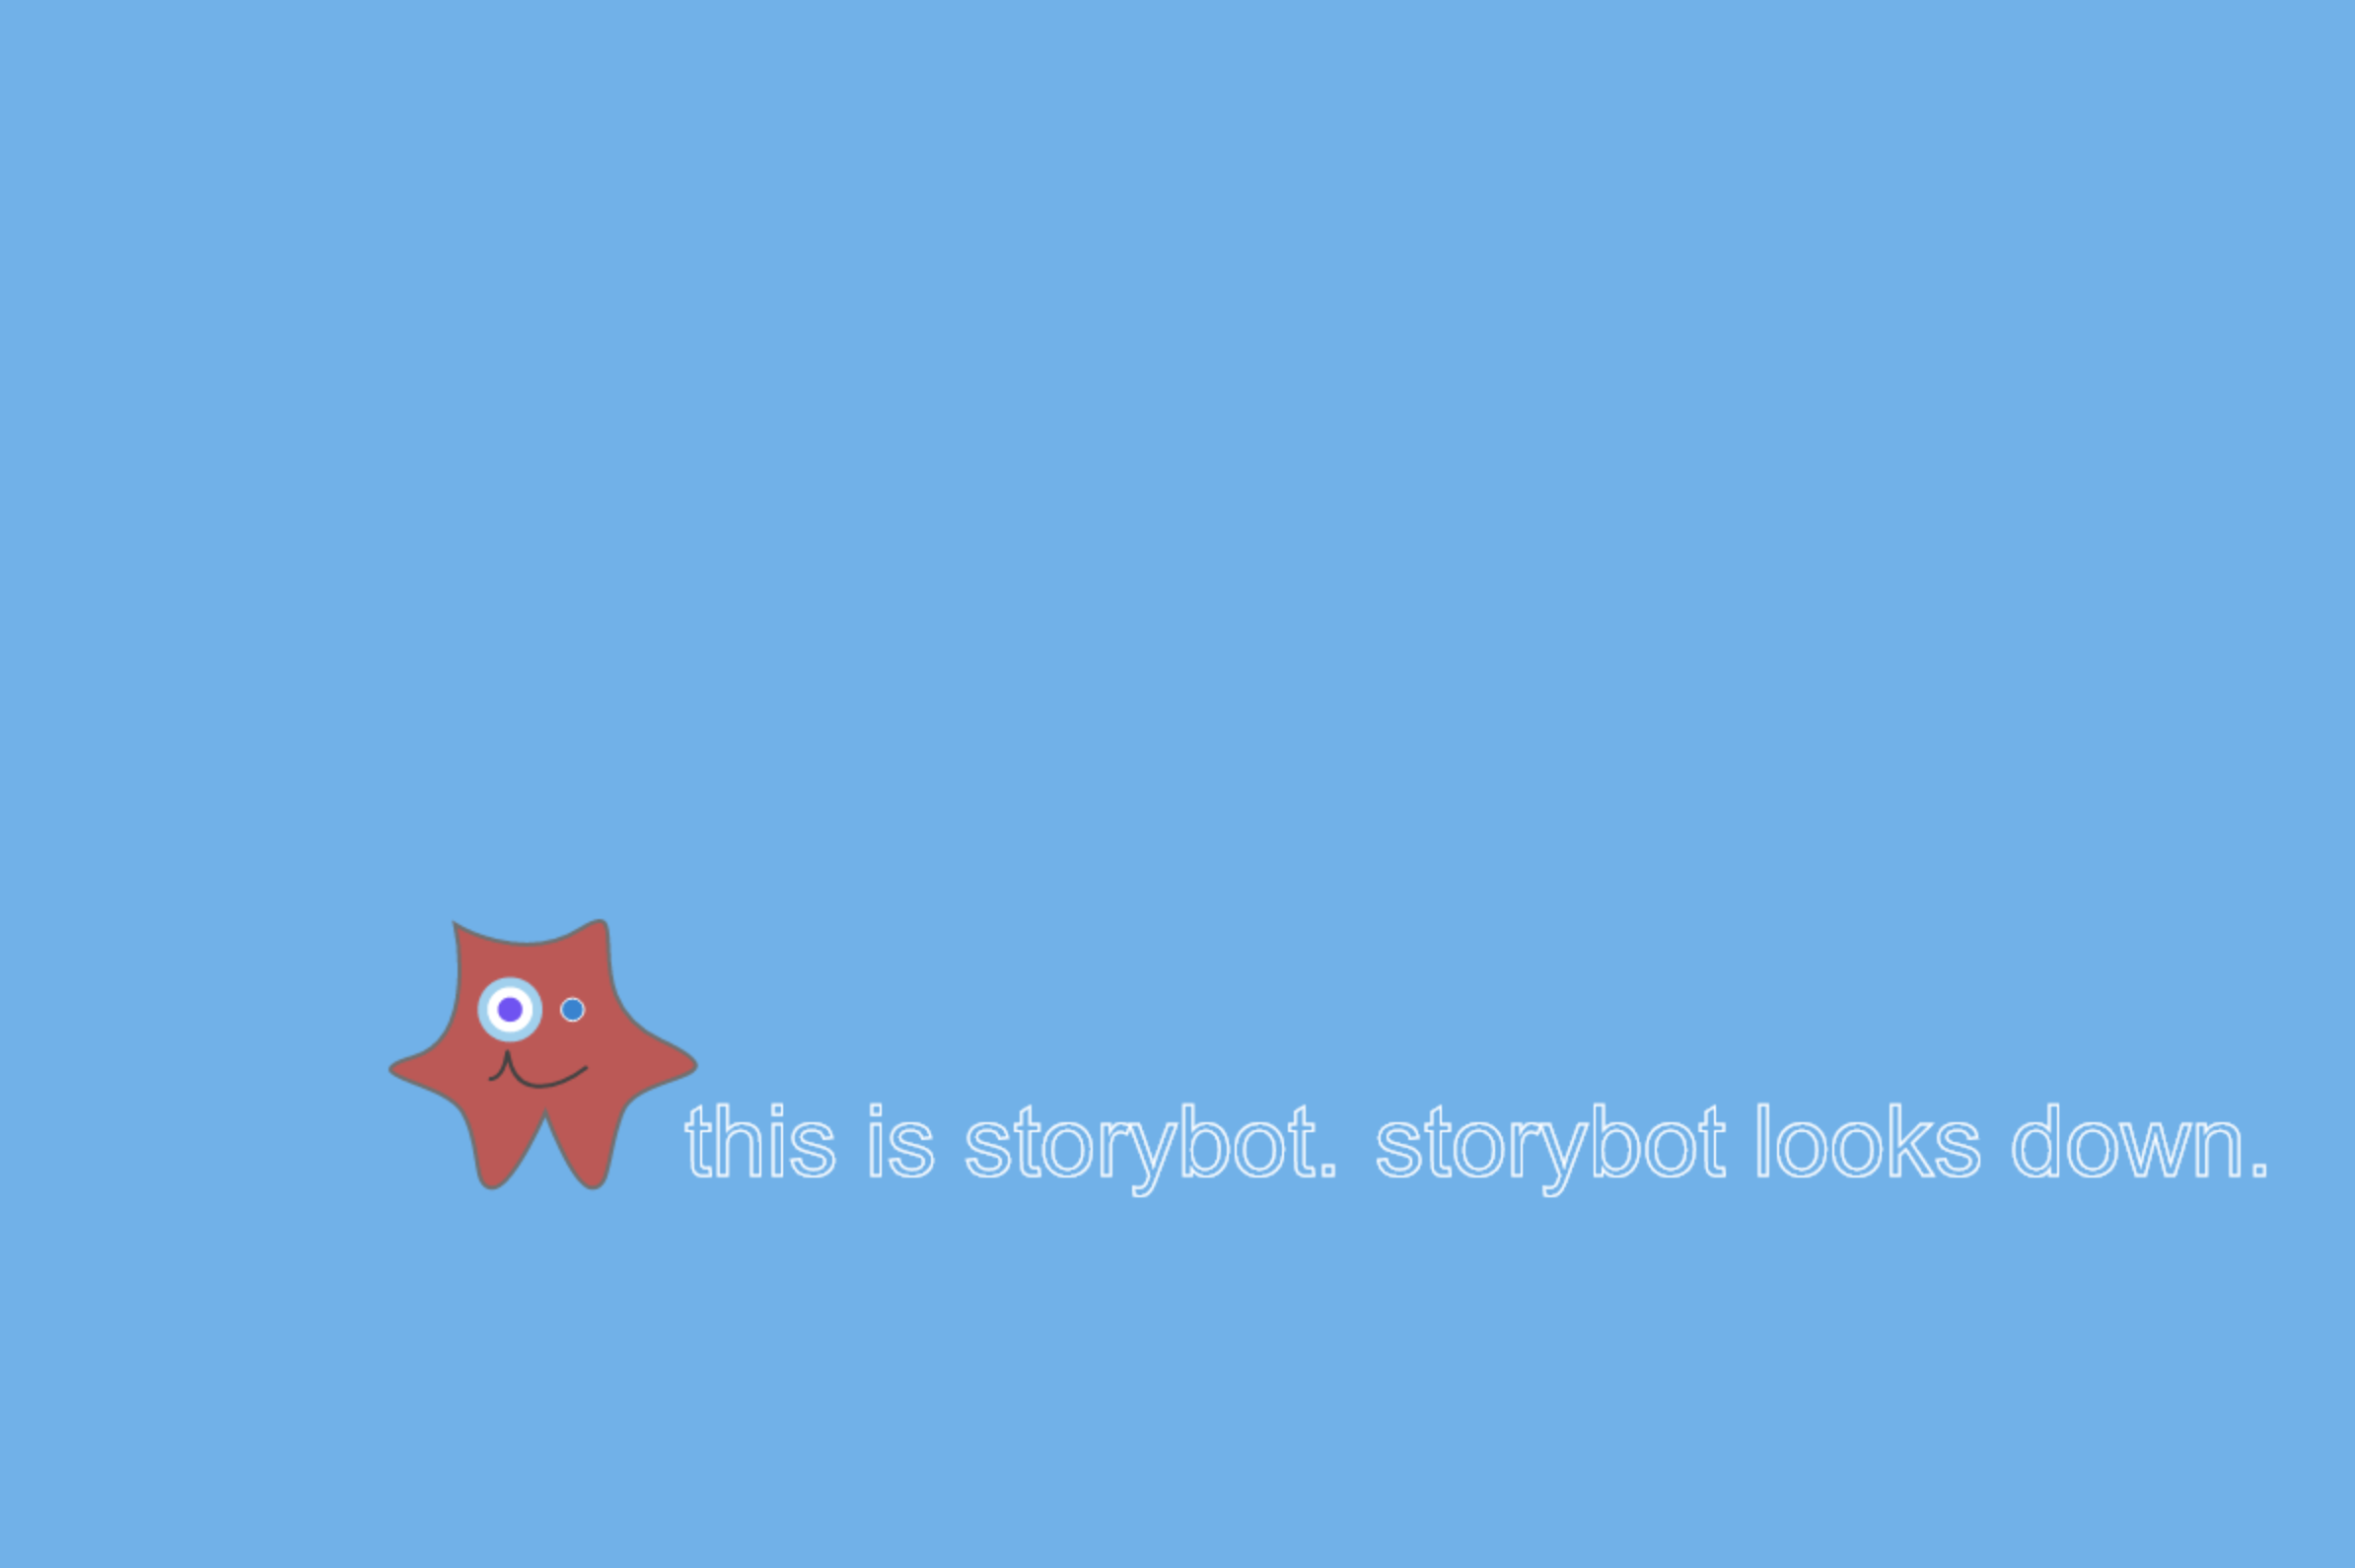 Storybot image io looks down